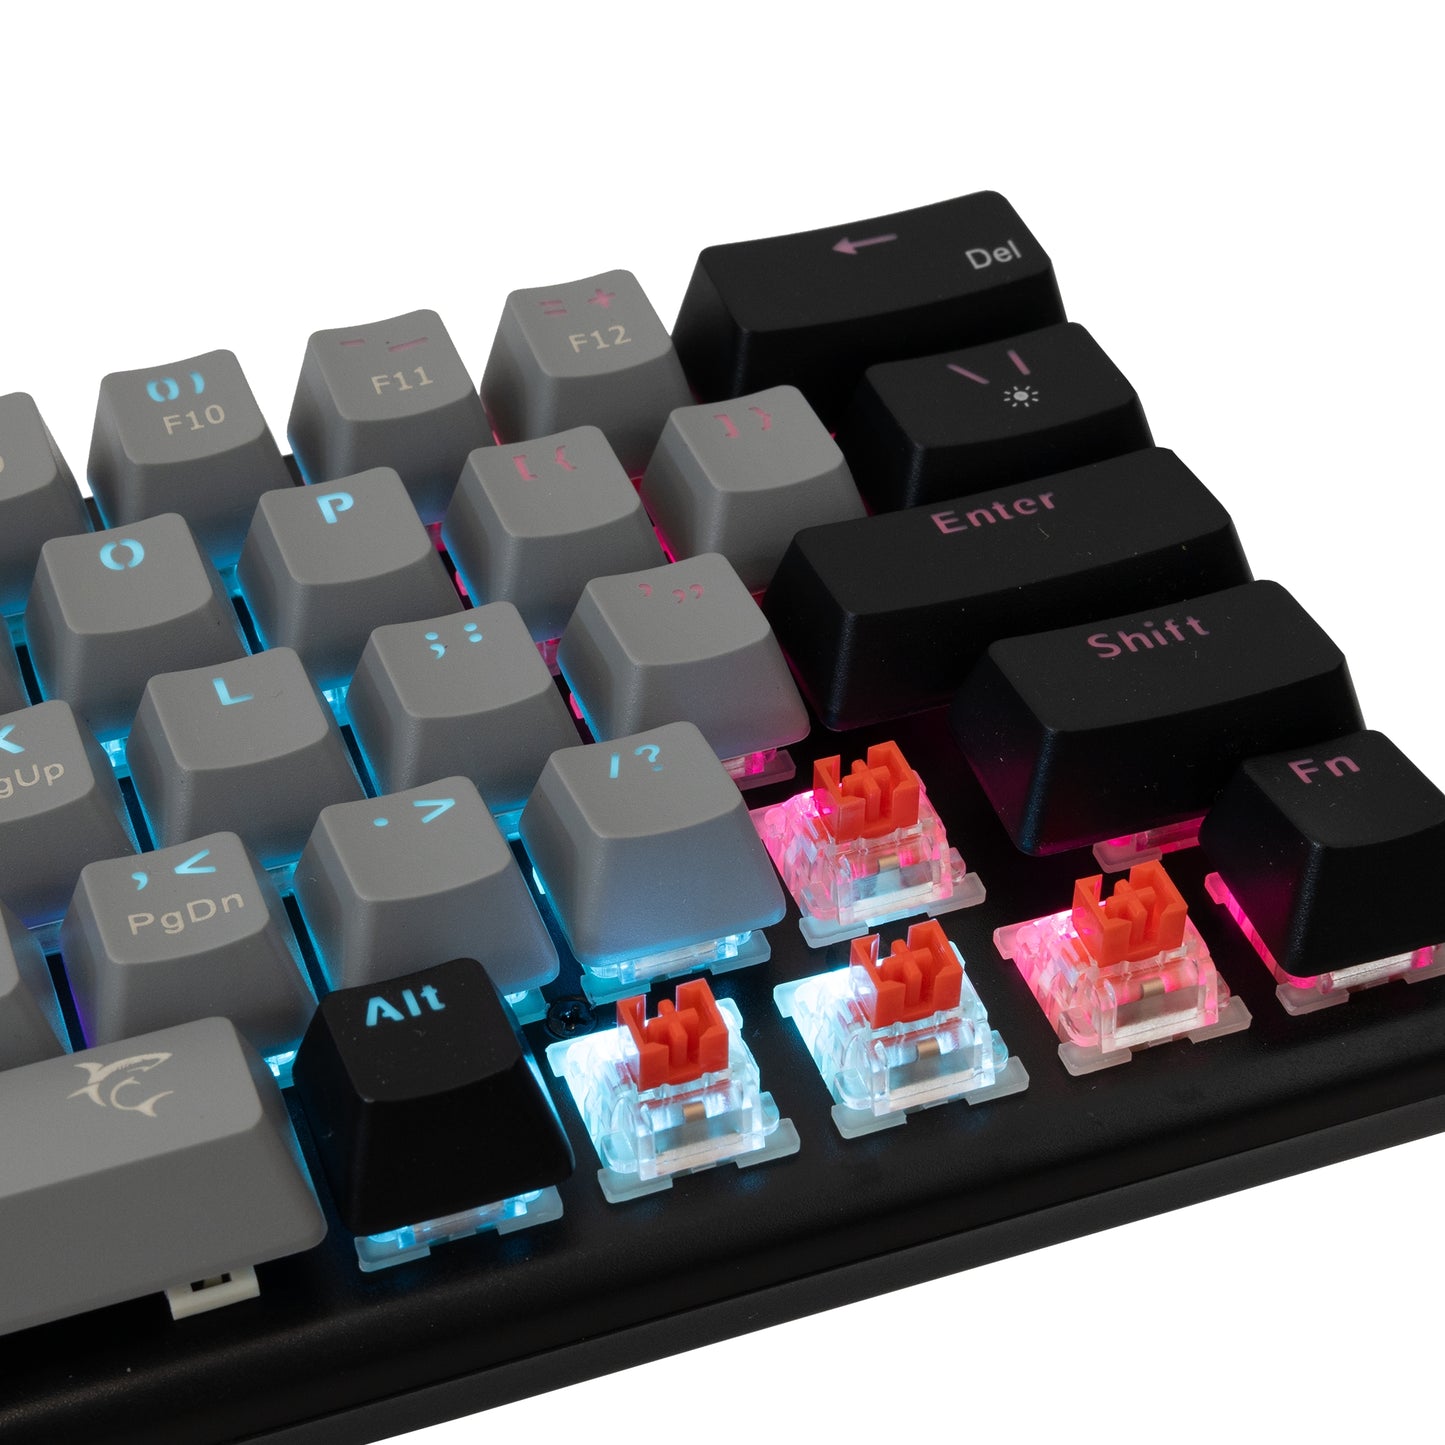 White Shark GK-002711 Wakizashi keyboard gray-black with Red Switches